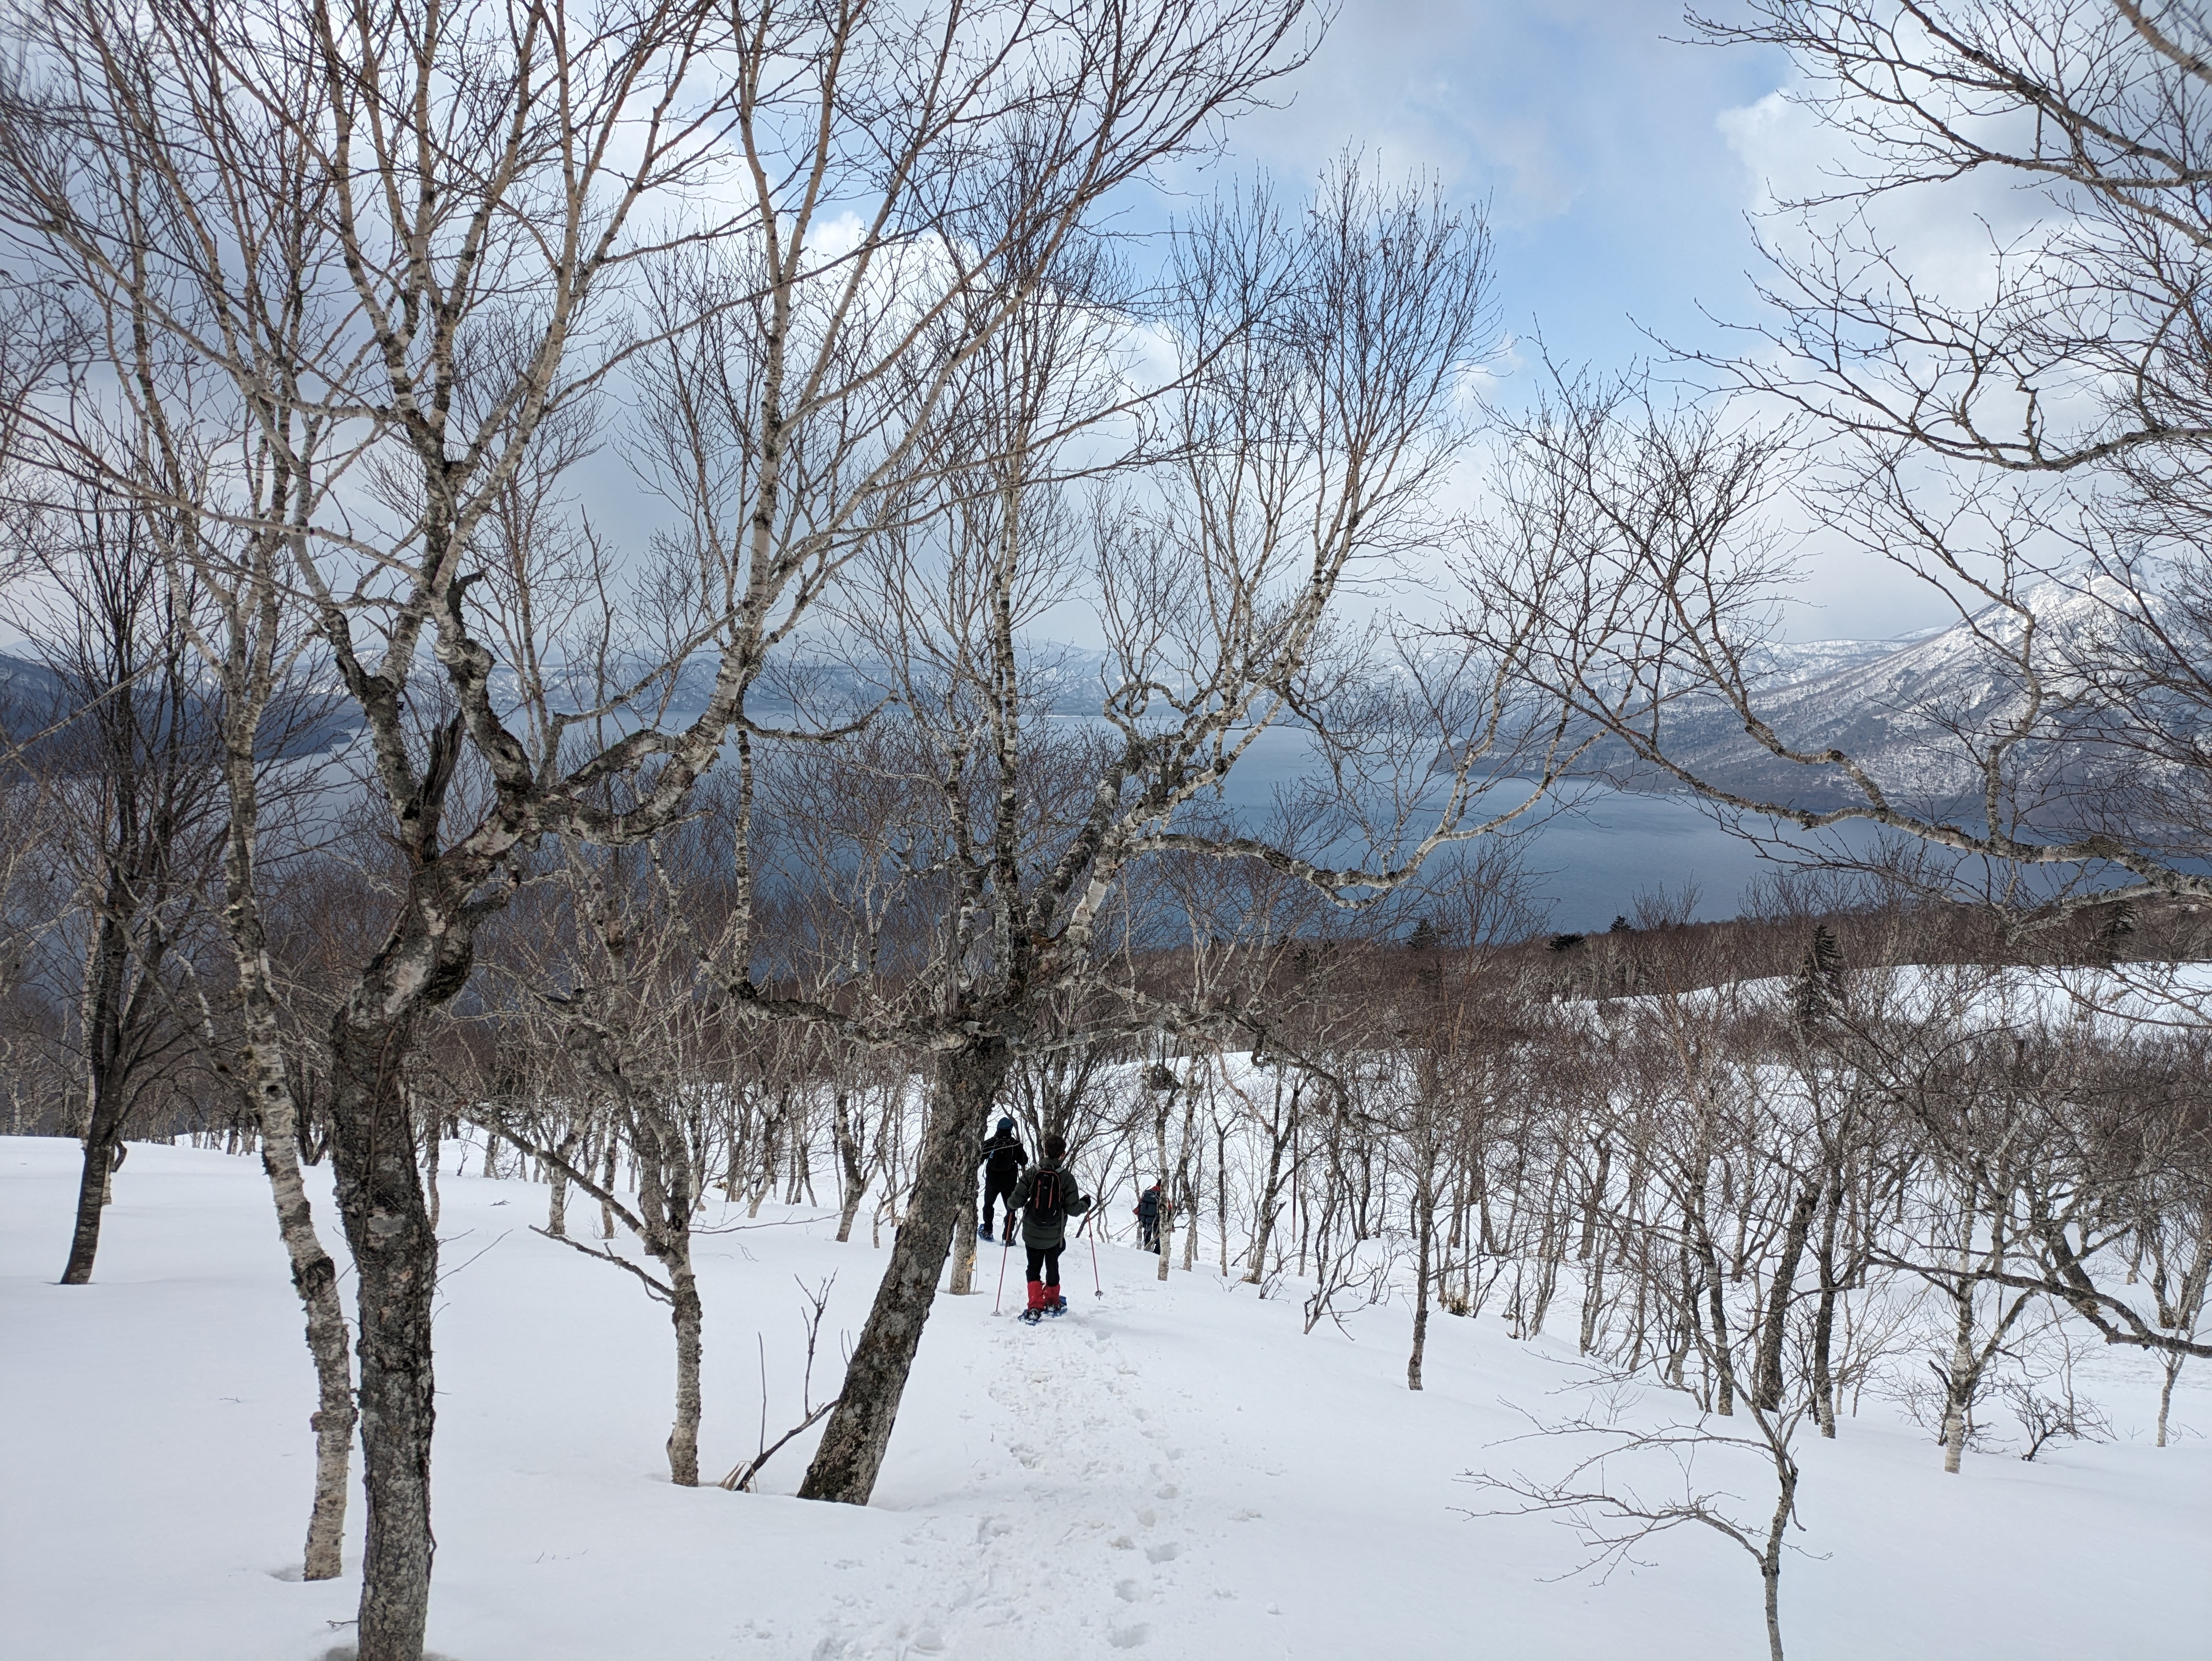 Guests descend Mt. Monbetsu on snowshoes through a birch forest.